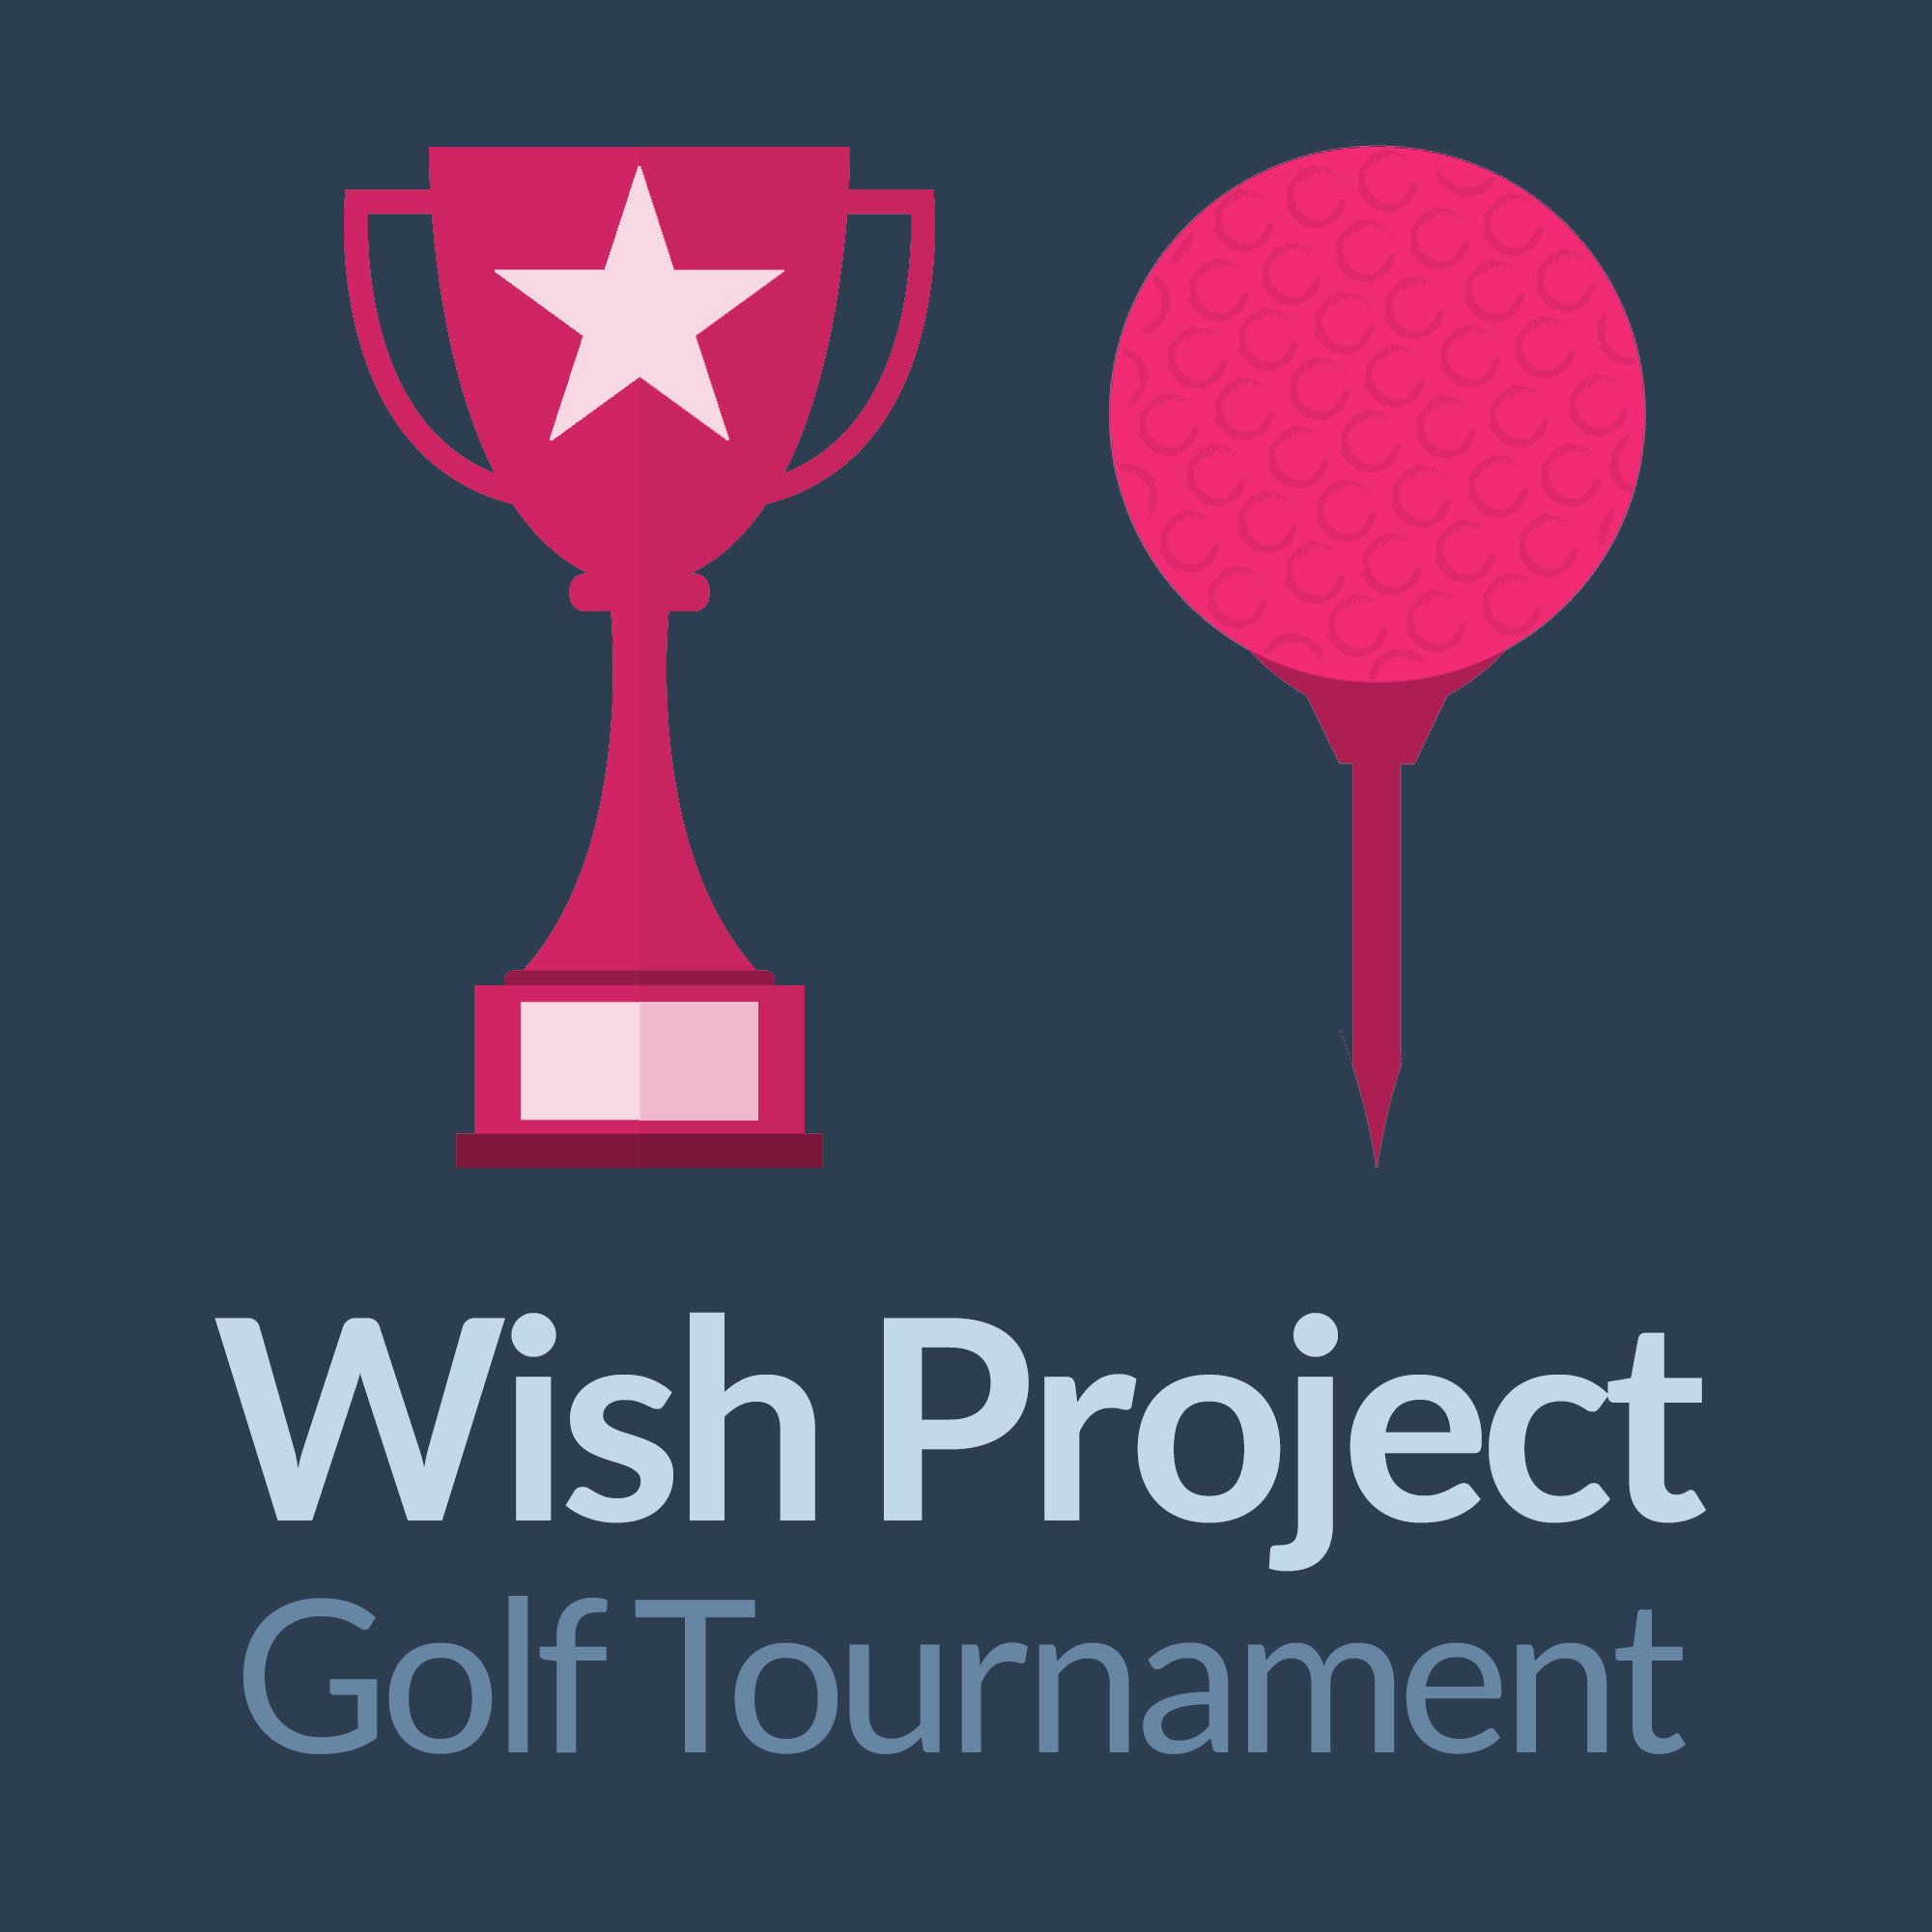 Wish Project Golf Tournament.